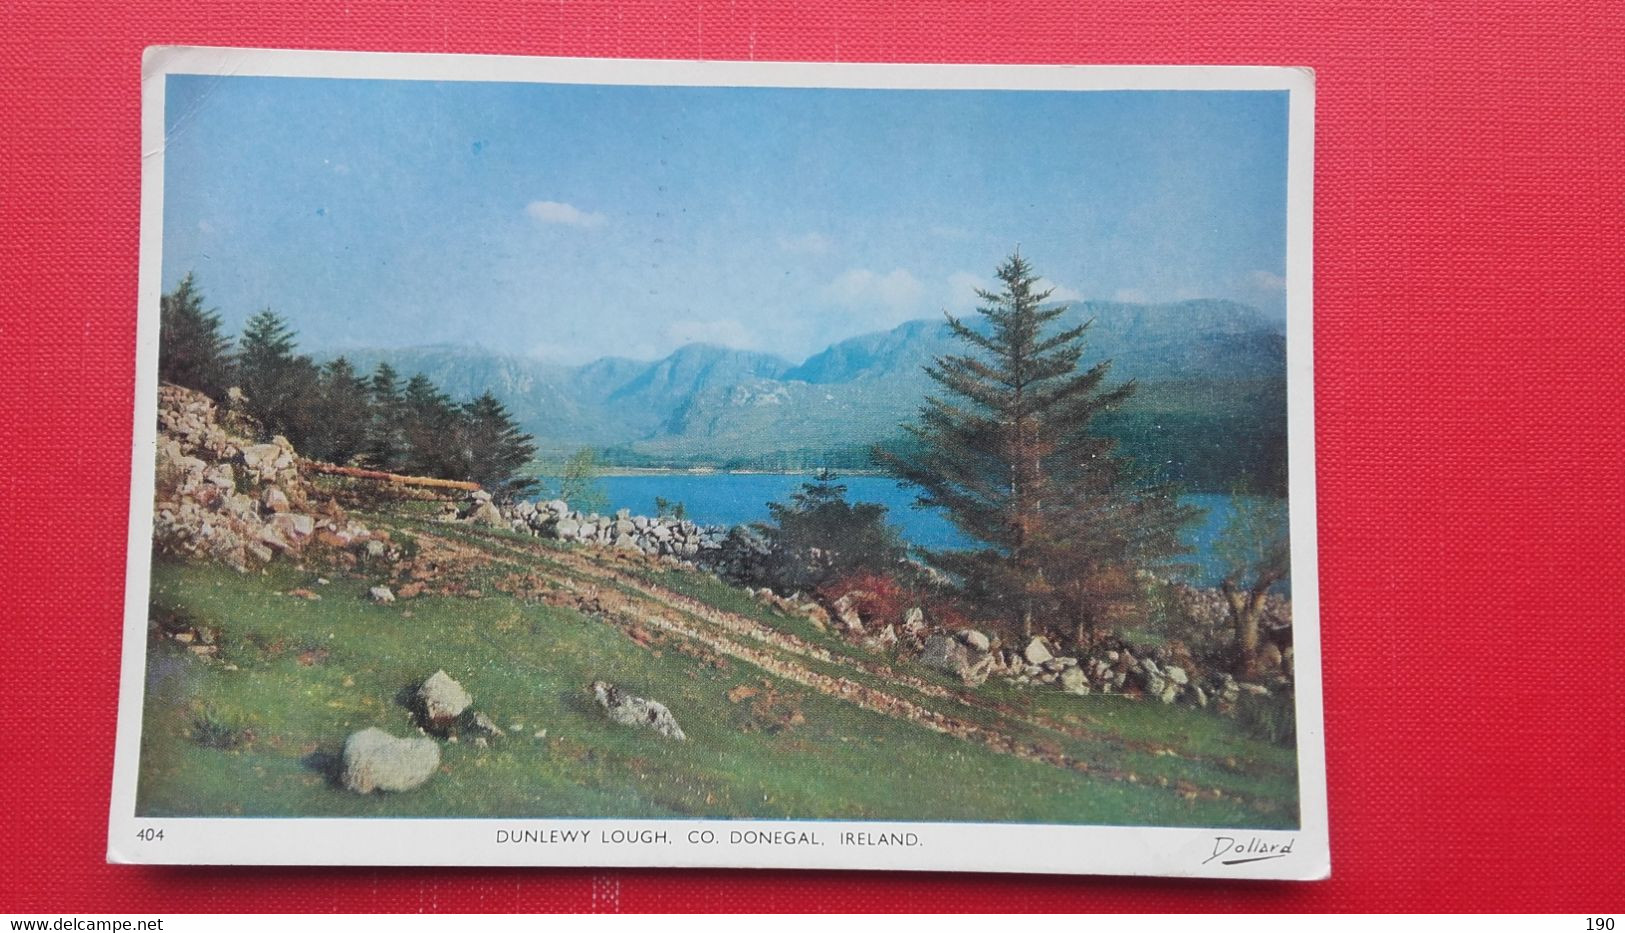 7 postcards:PORT-NA-BLAGH,MUCKROSS HEADERRIGAL MOUNTAINDUNLEWY LOUGH,MARBLE HILL,LETTERKENNY,MULROY BAY